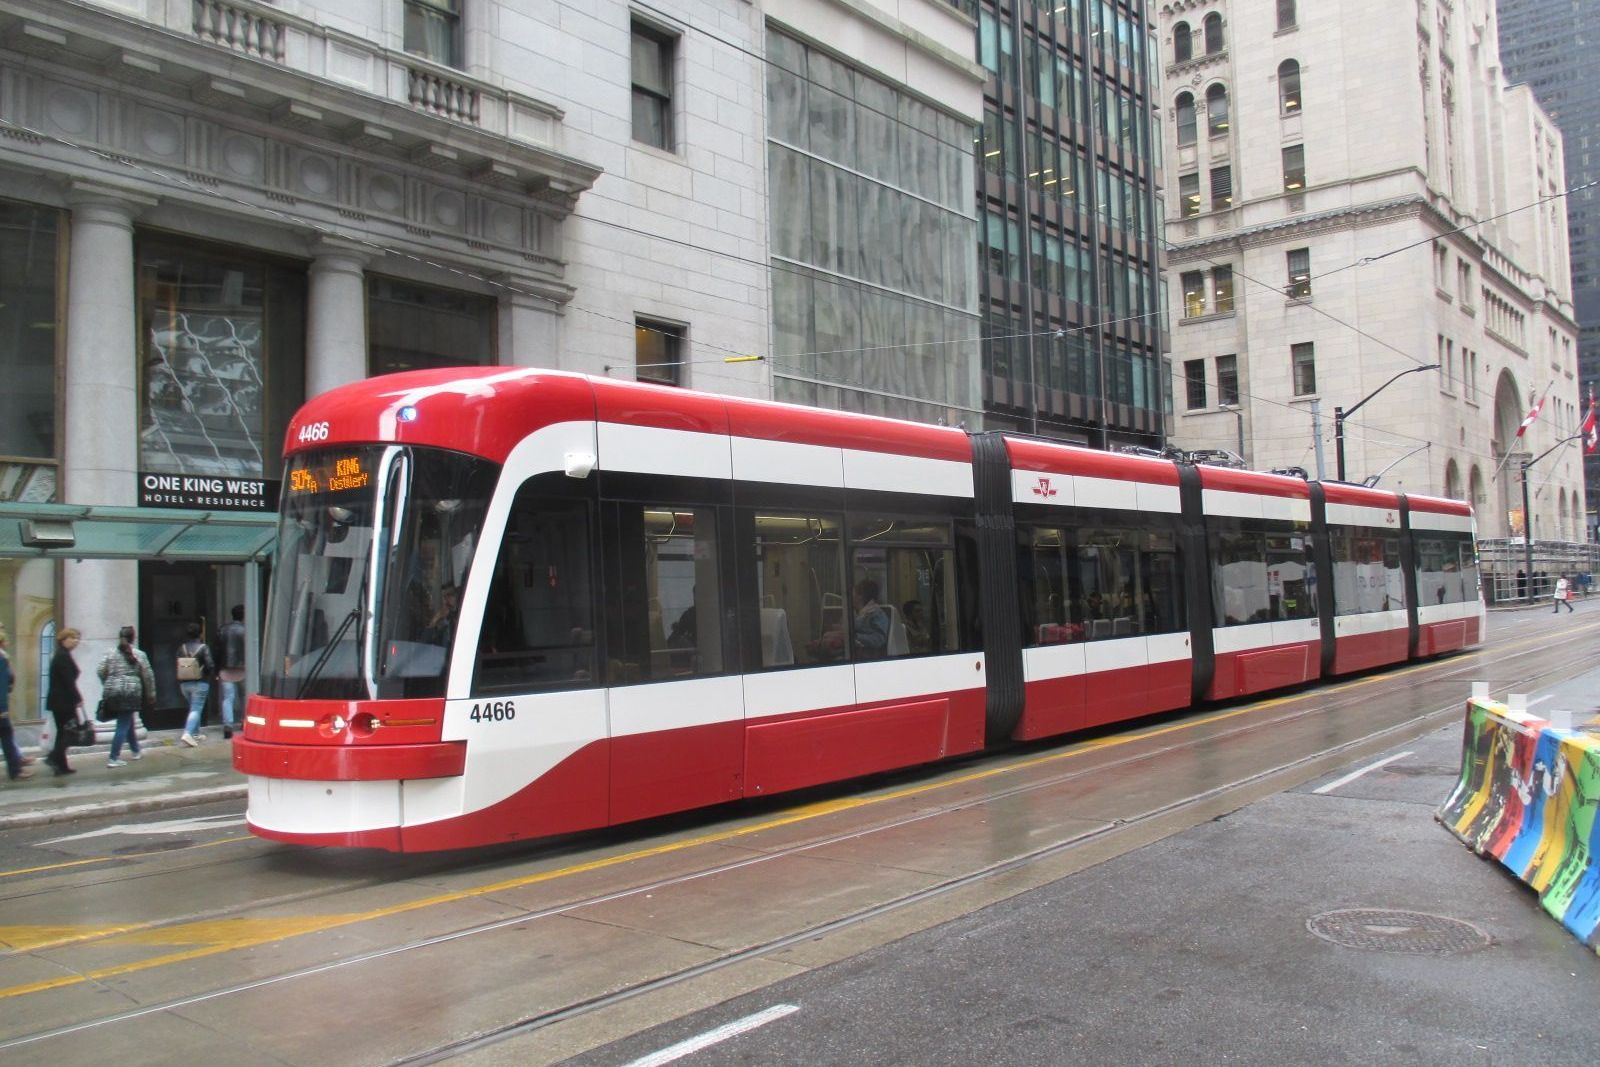 TTC's new Alstom supplied low-floor streetcar